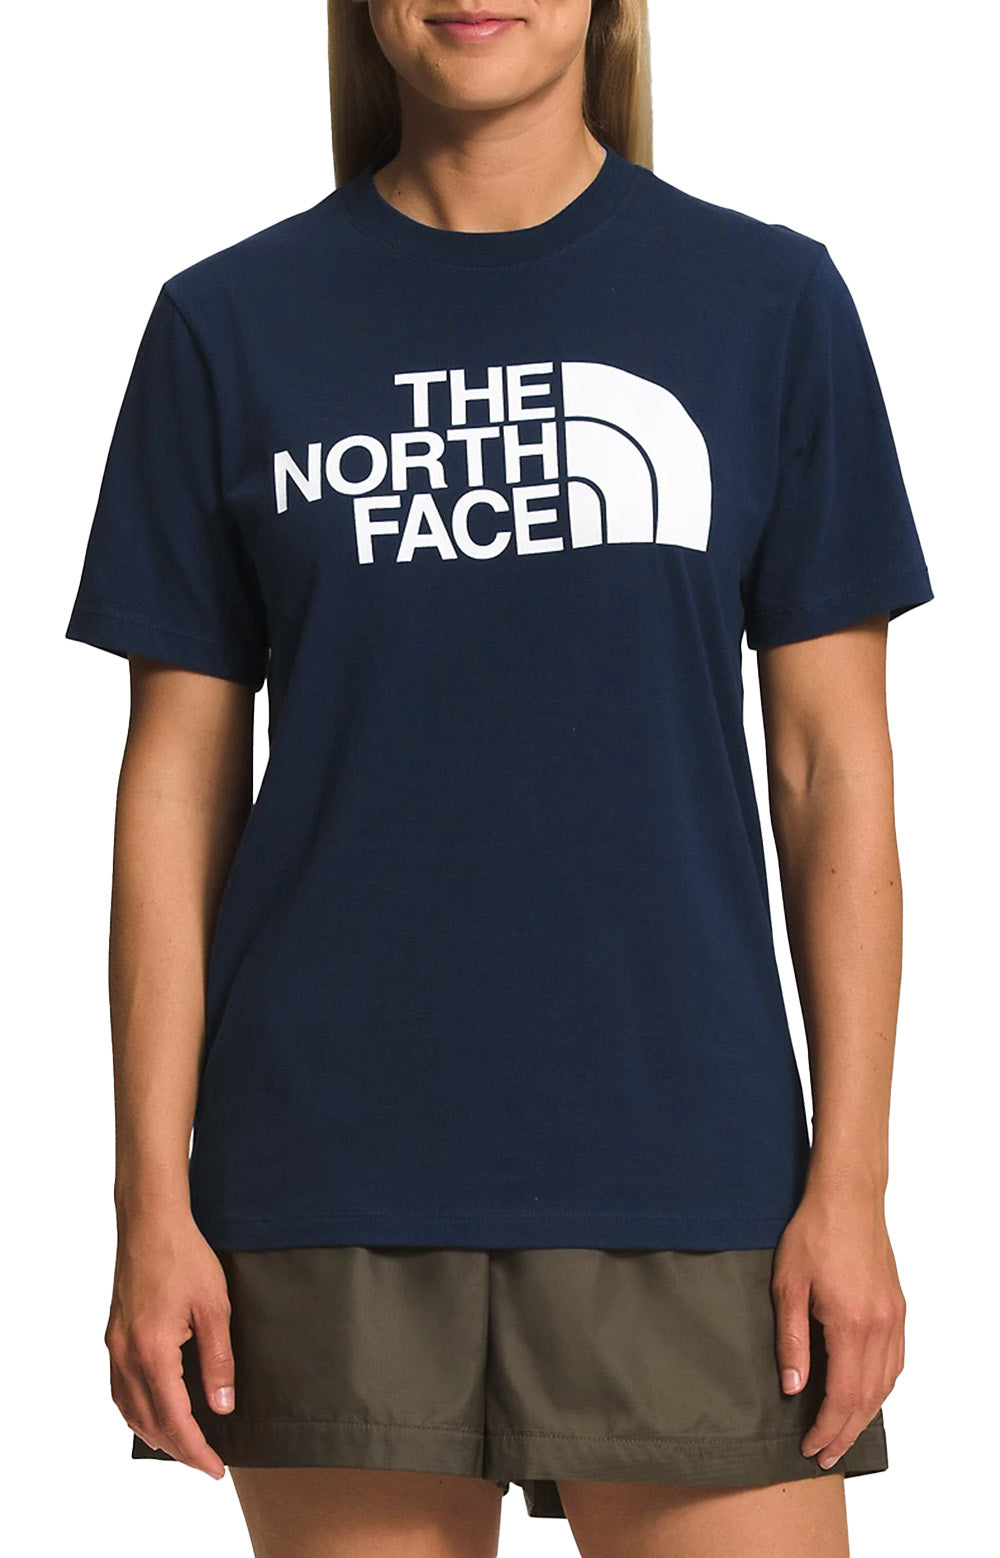 Half Dome T-Shirt - Summit Navy/TNF White